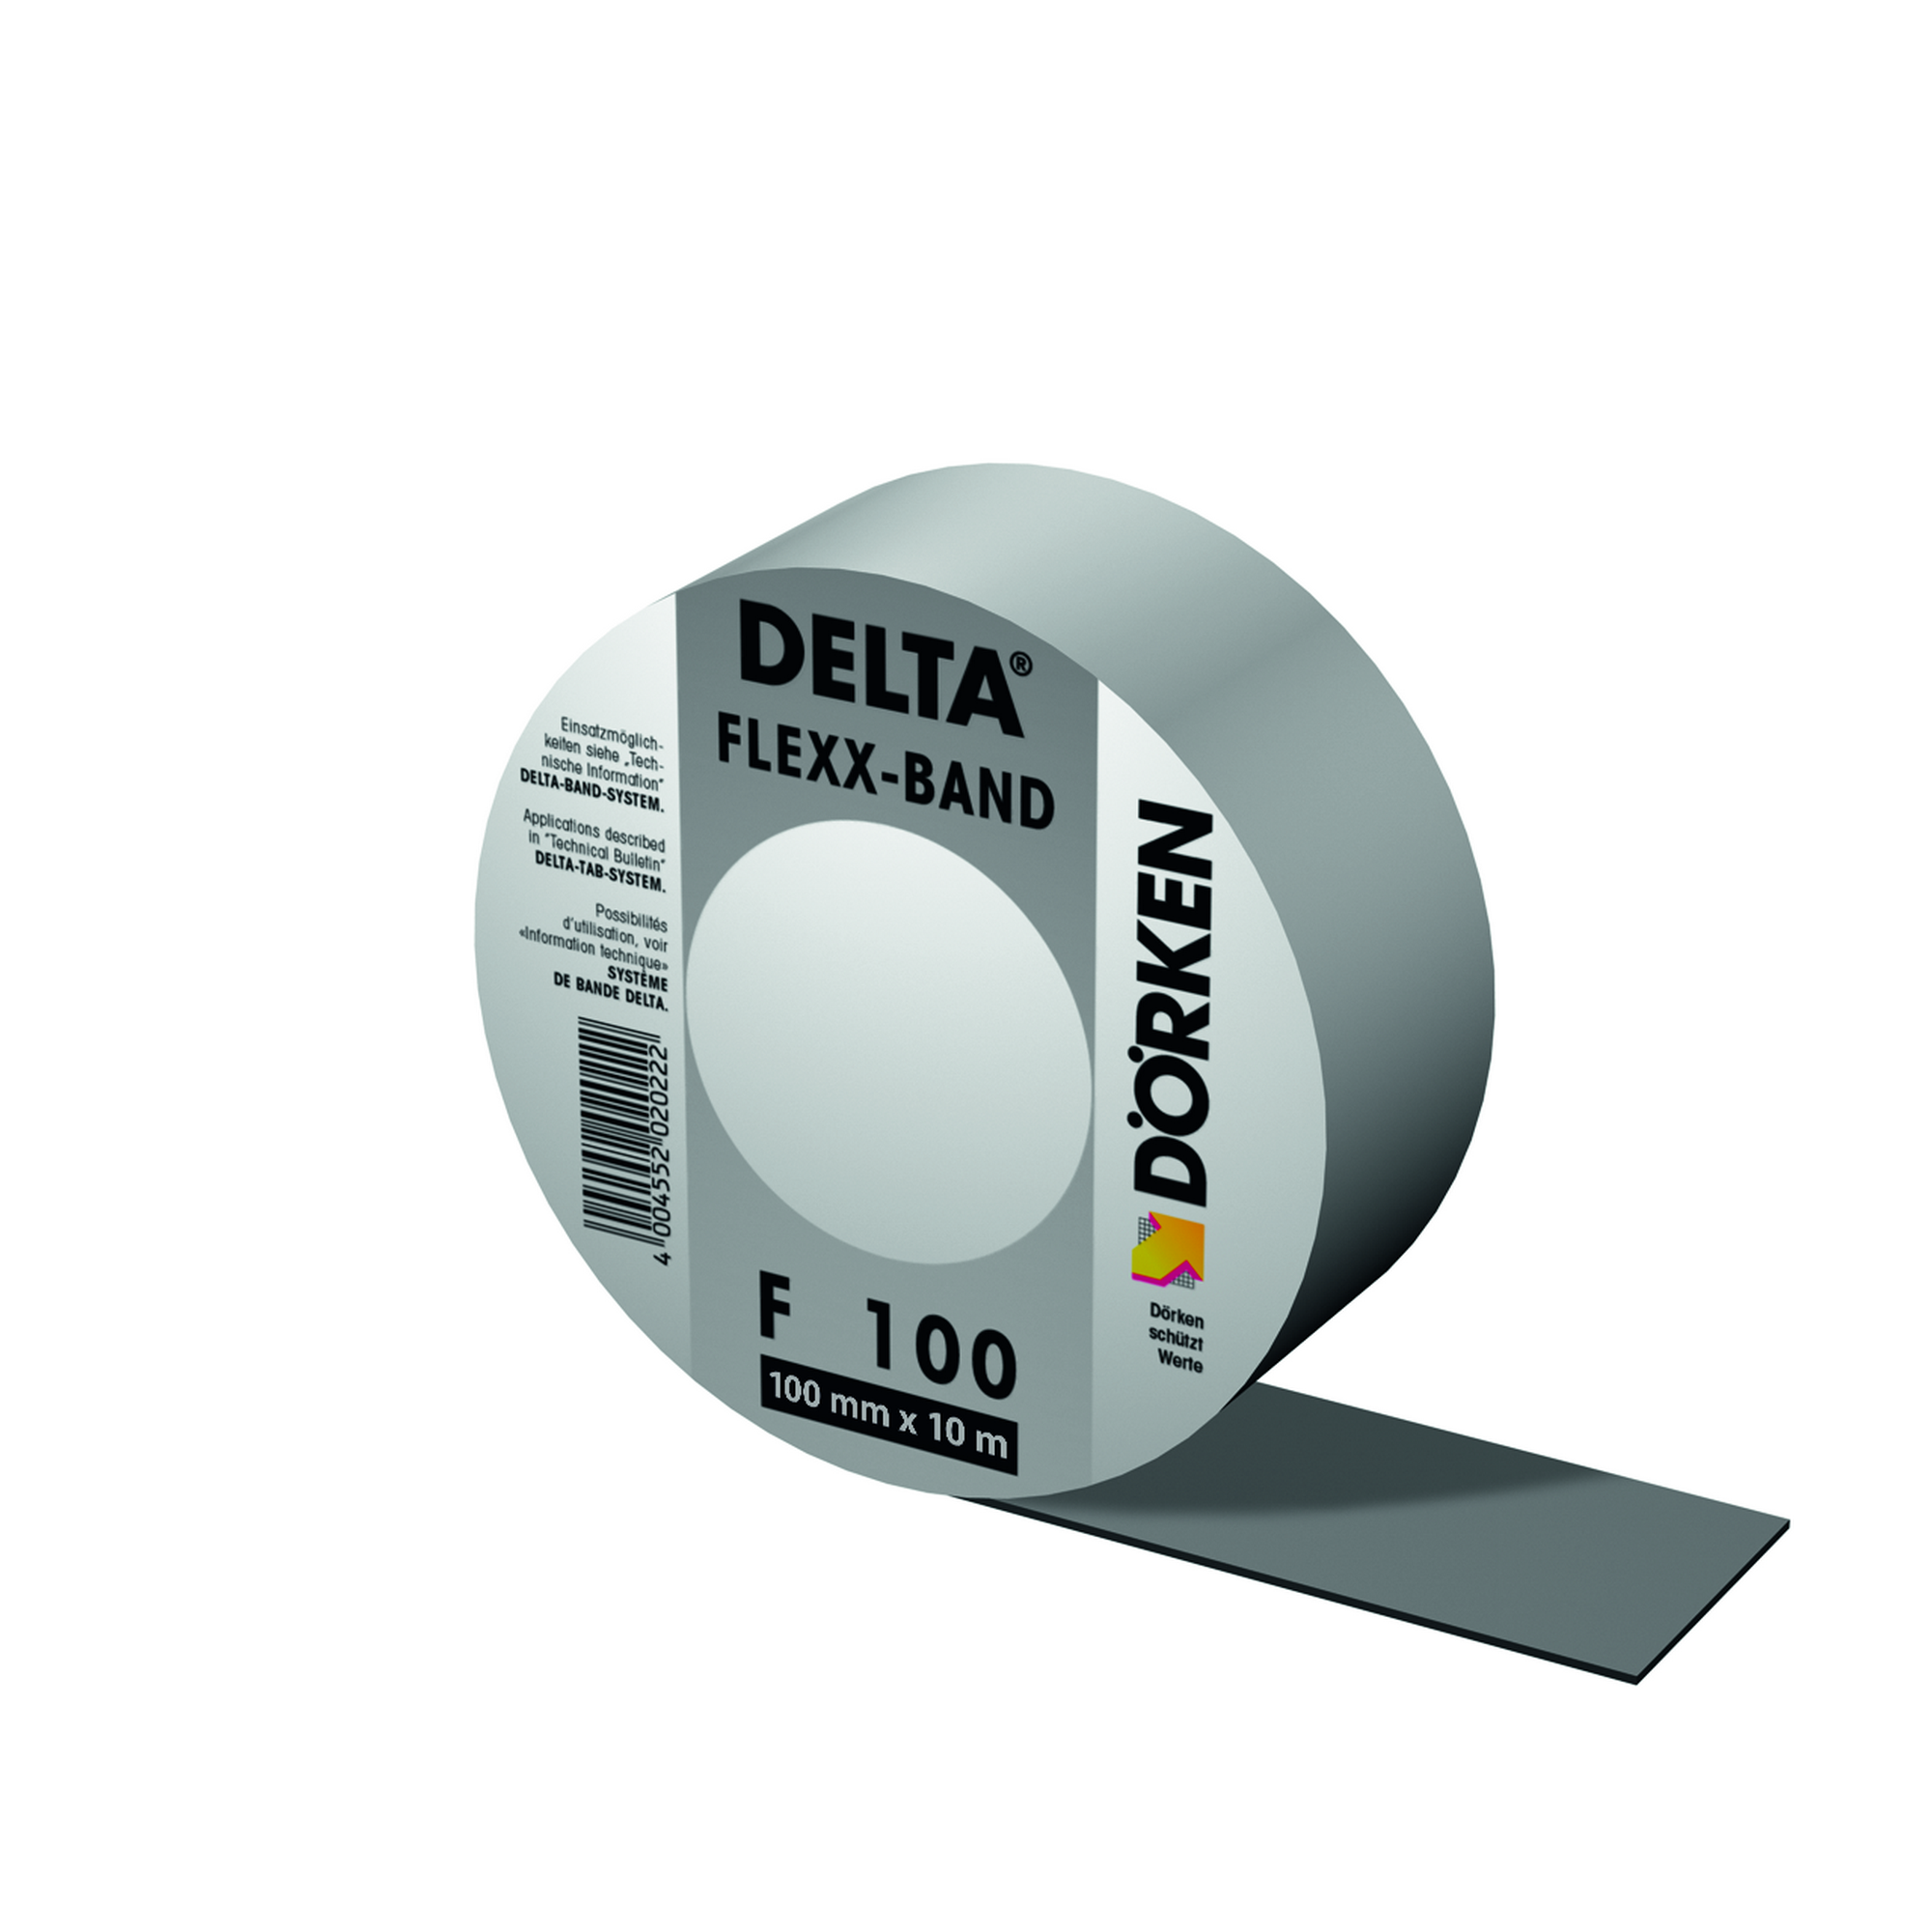 Delta-Flexx-Band 100 mm x 10 m + product picture